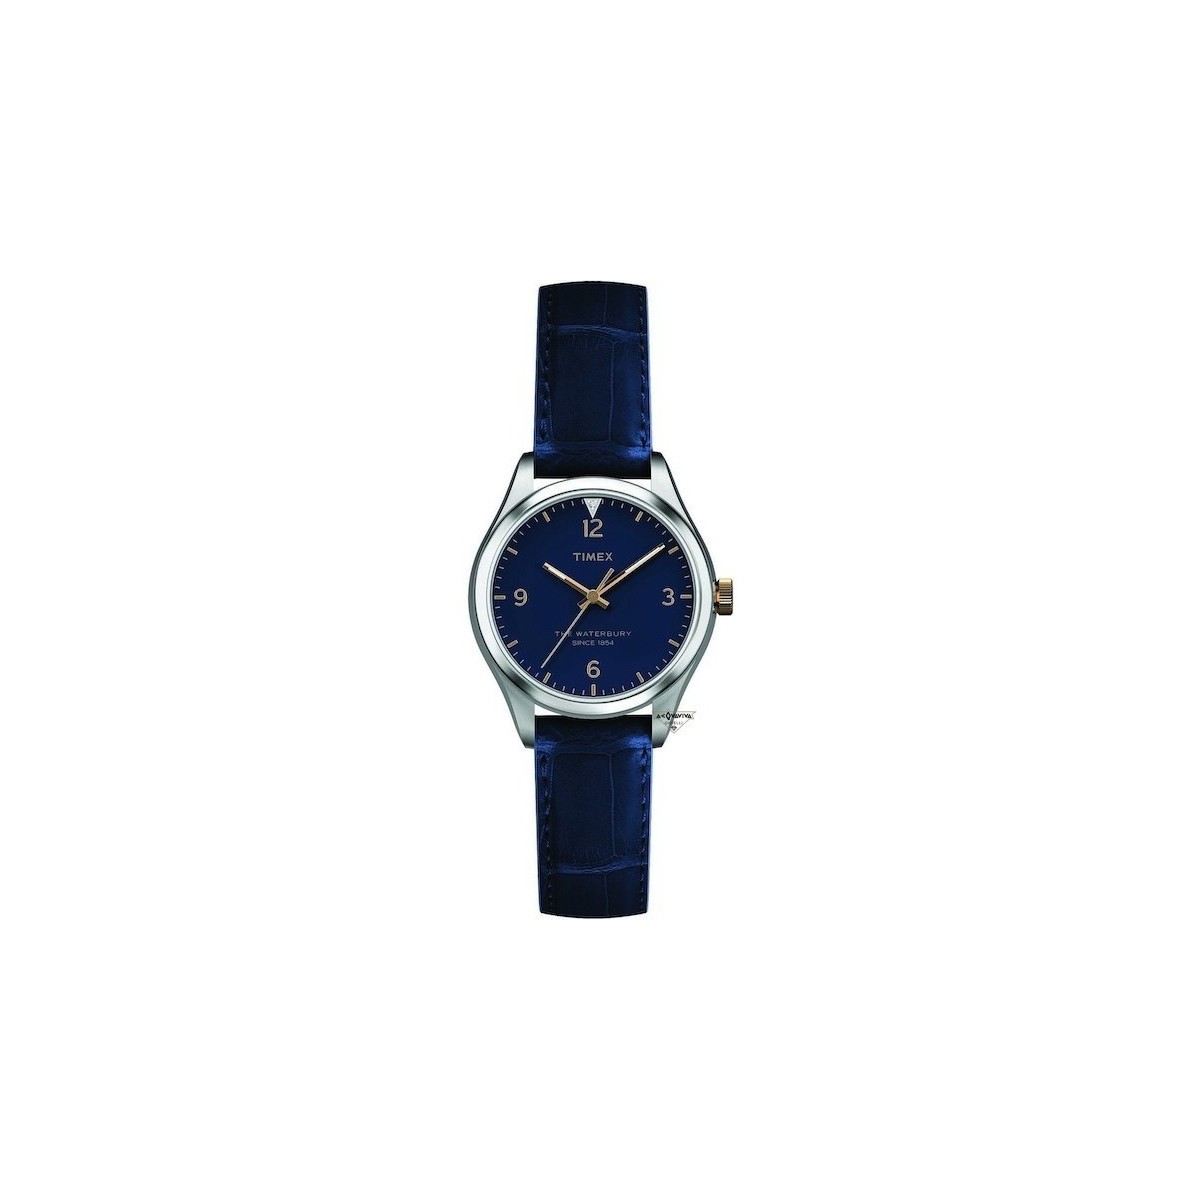 Orologi & Gioielli Orologi e gioielli Timex  Argento